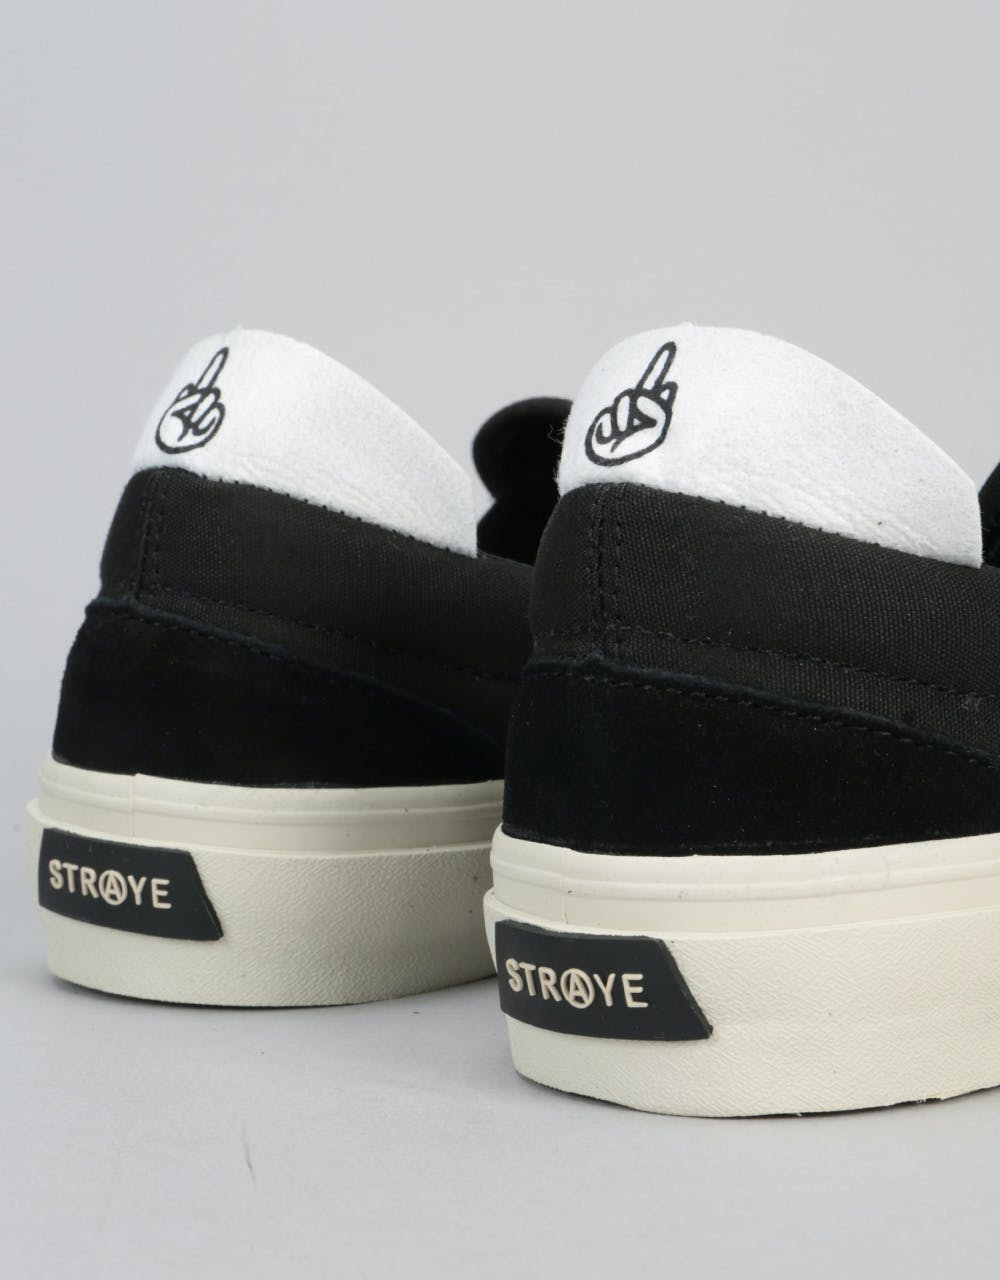 Straye Ventura Slip-On Skate Shoes - Black/Bone Suede